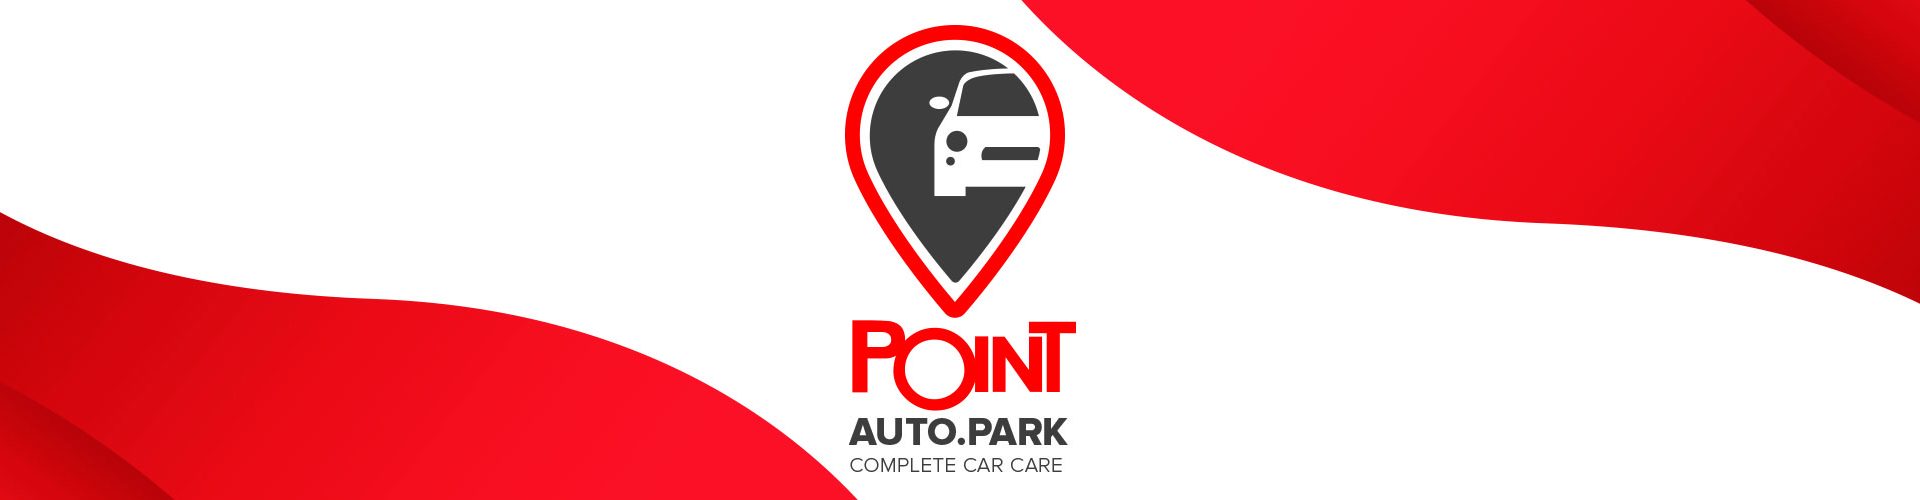 PointAutoPark_Cretacom-1.jpg